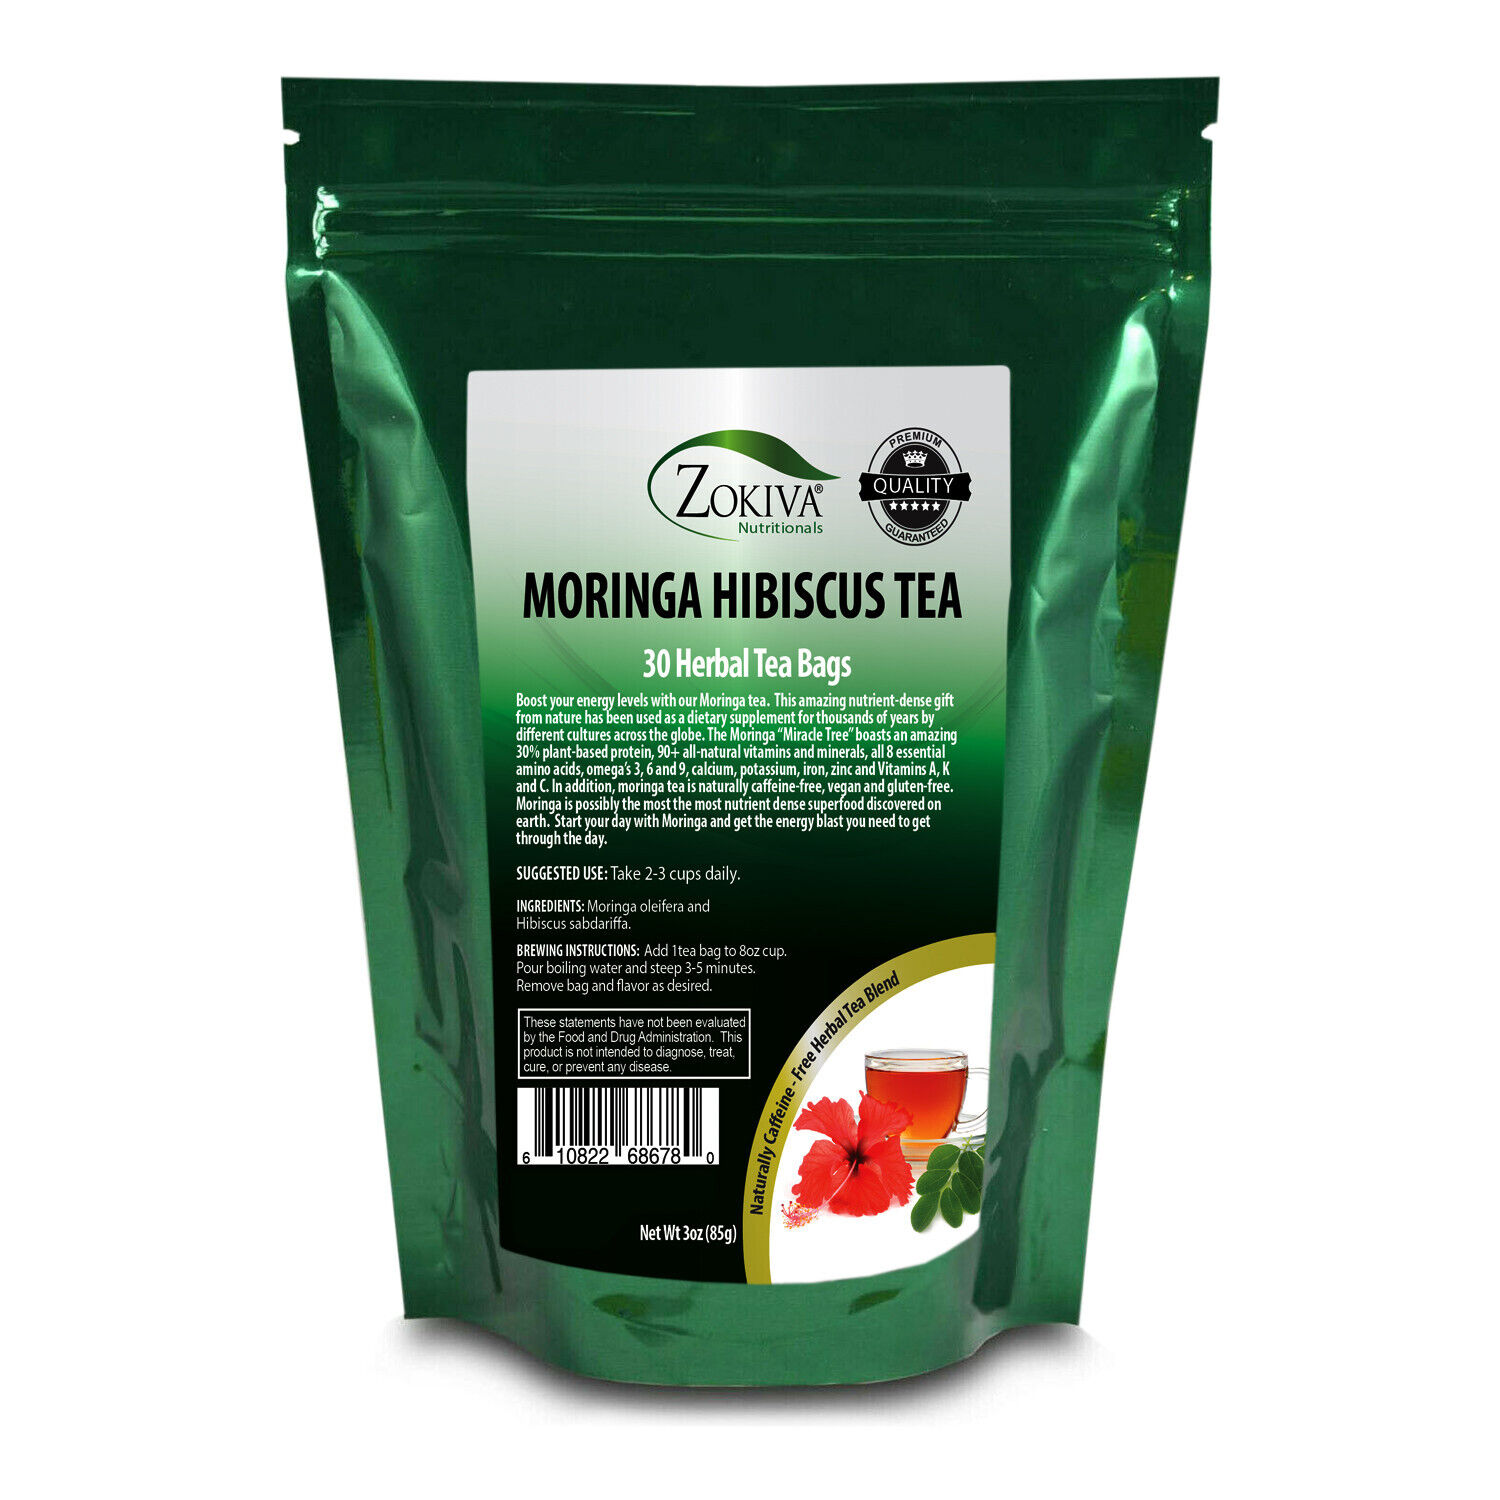 Moringa Hibiscus Tea Bags (30) All-Natural - Caffeine-Free, Premium Herbal Tea Zokiva Nutritionals ZOKIVA-MORINGA-HIBISCUS-TEA